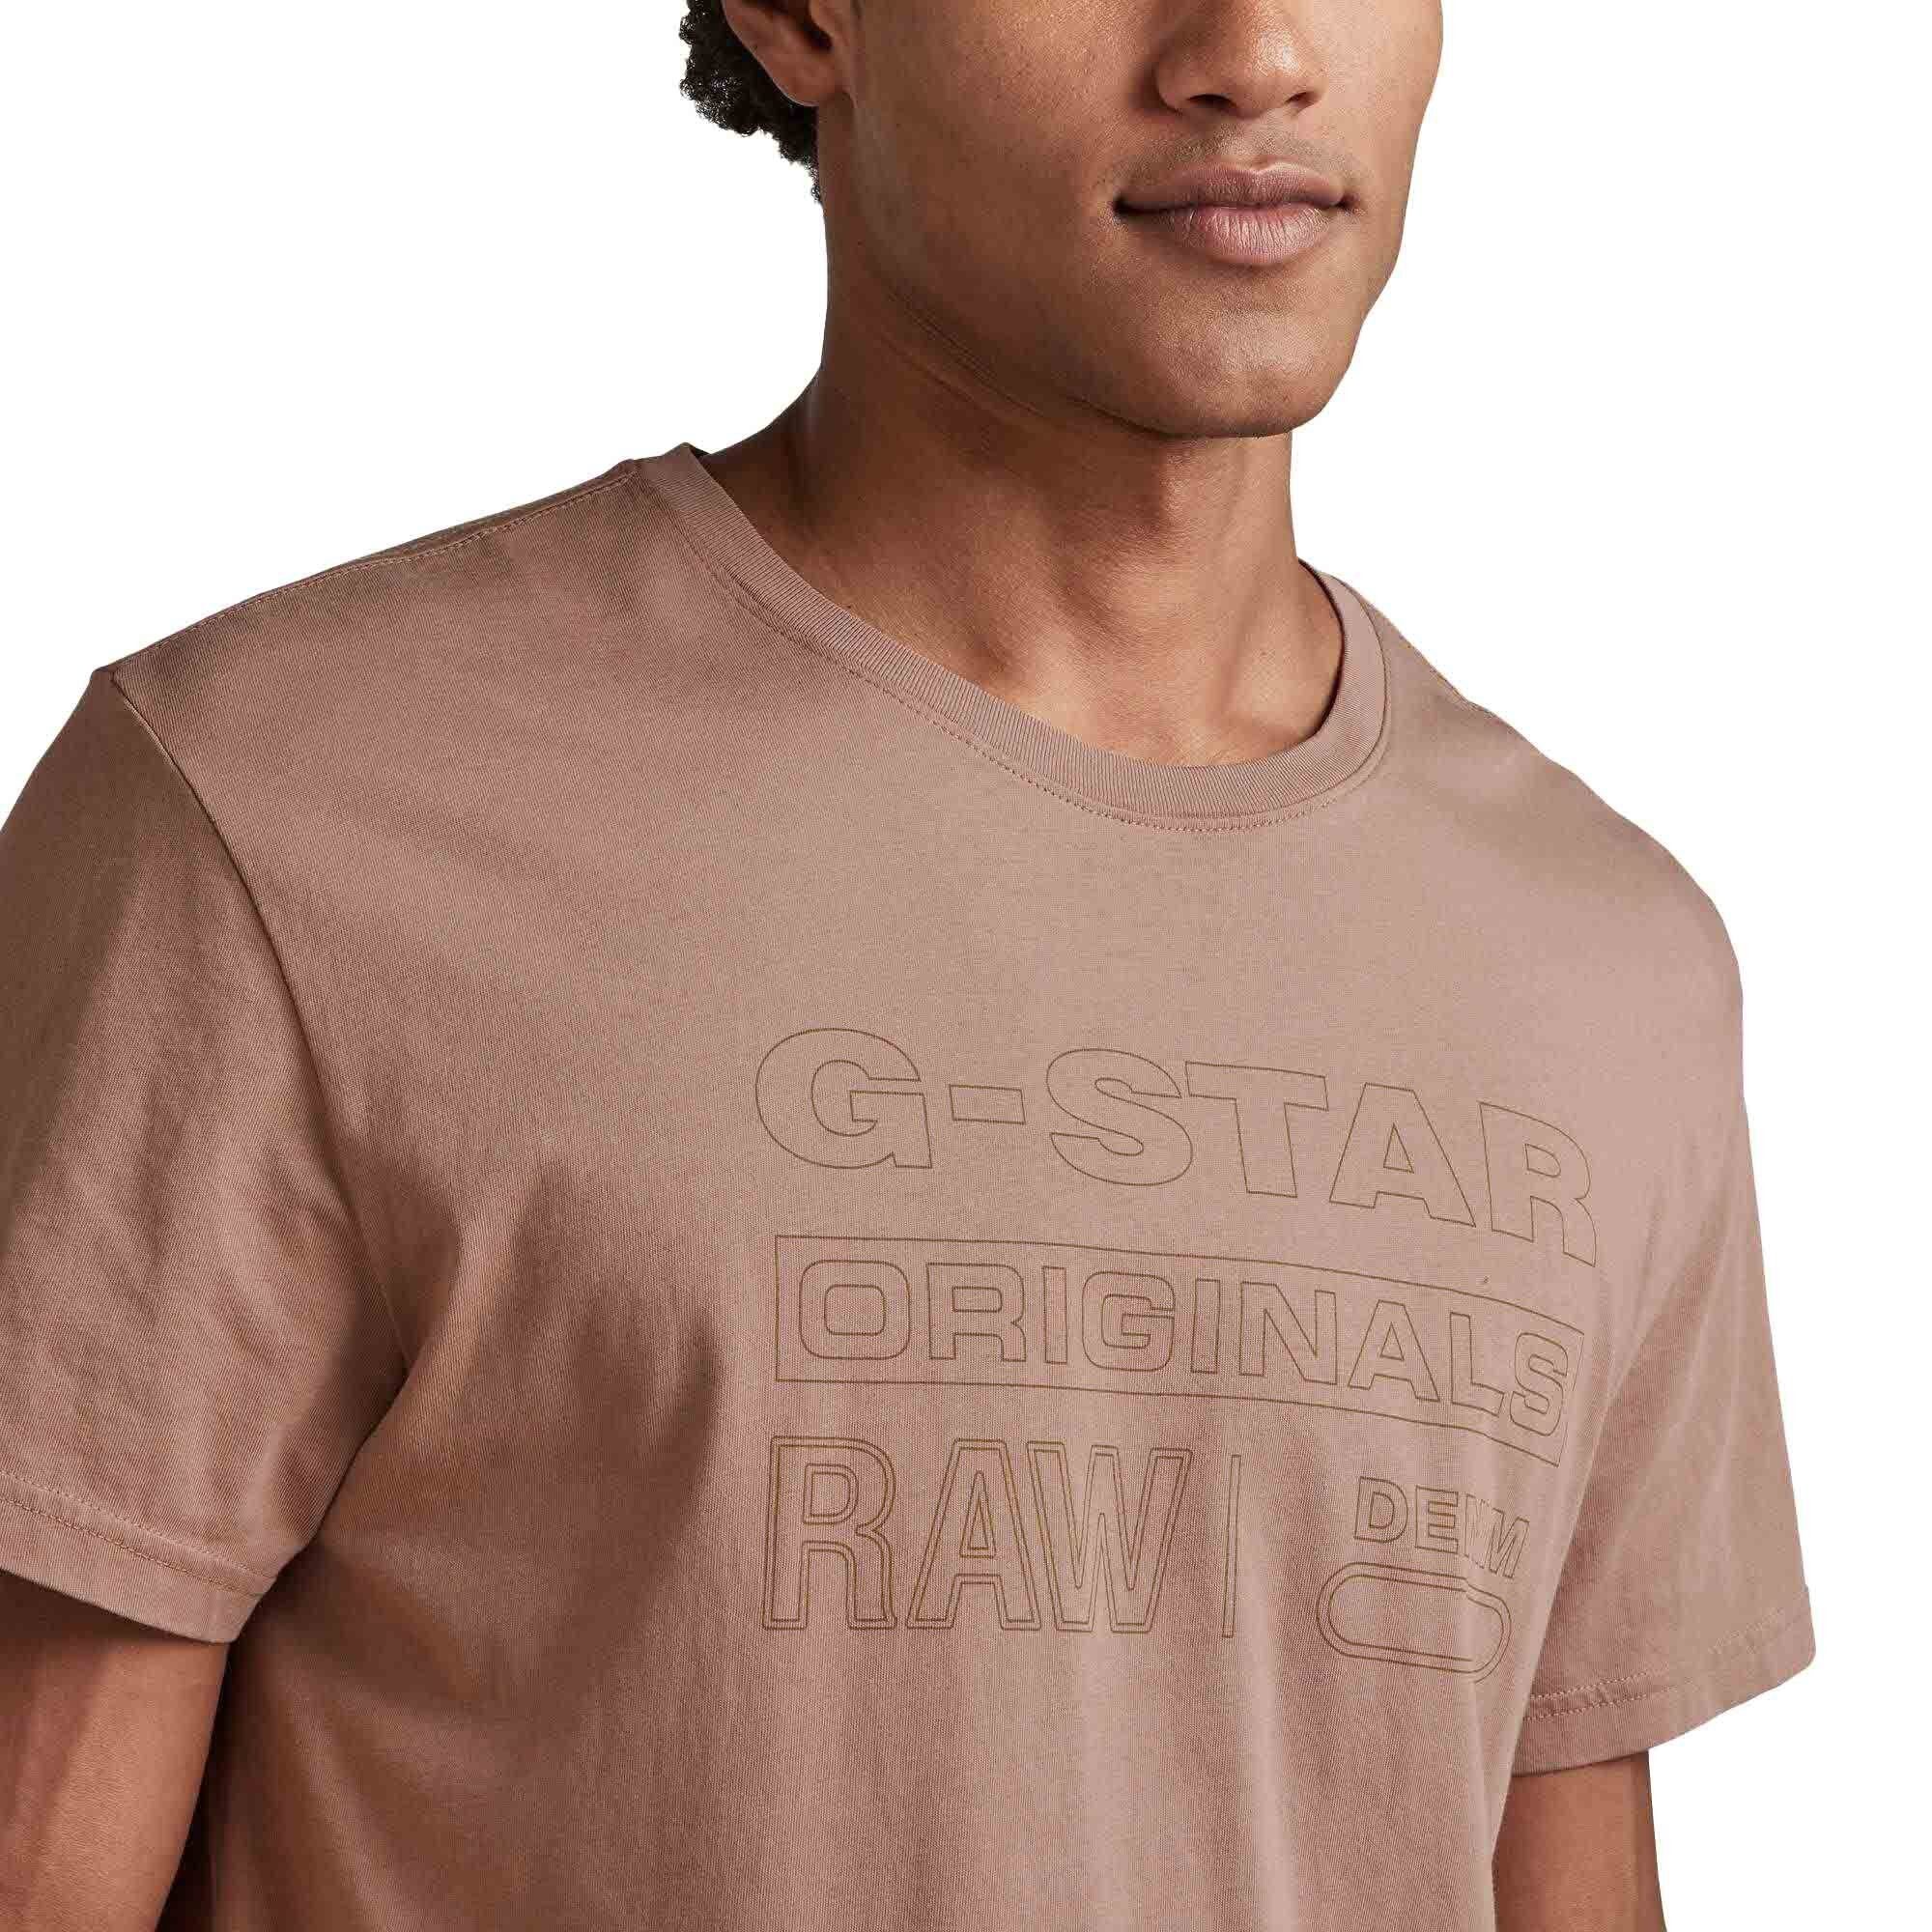 Rundhals, Braun RAW RAW-Logo T-Shirt Originals, - Herren G-Star T-Shirt